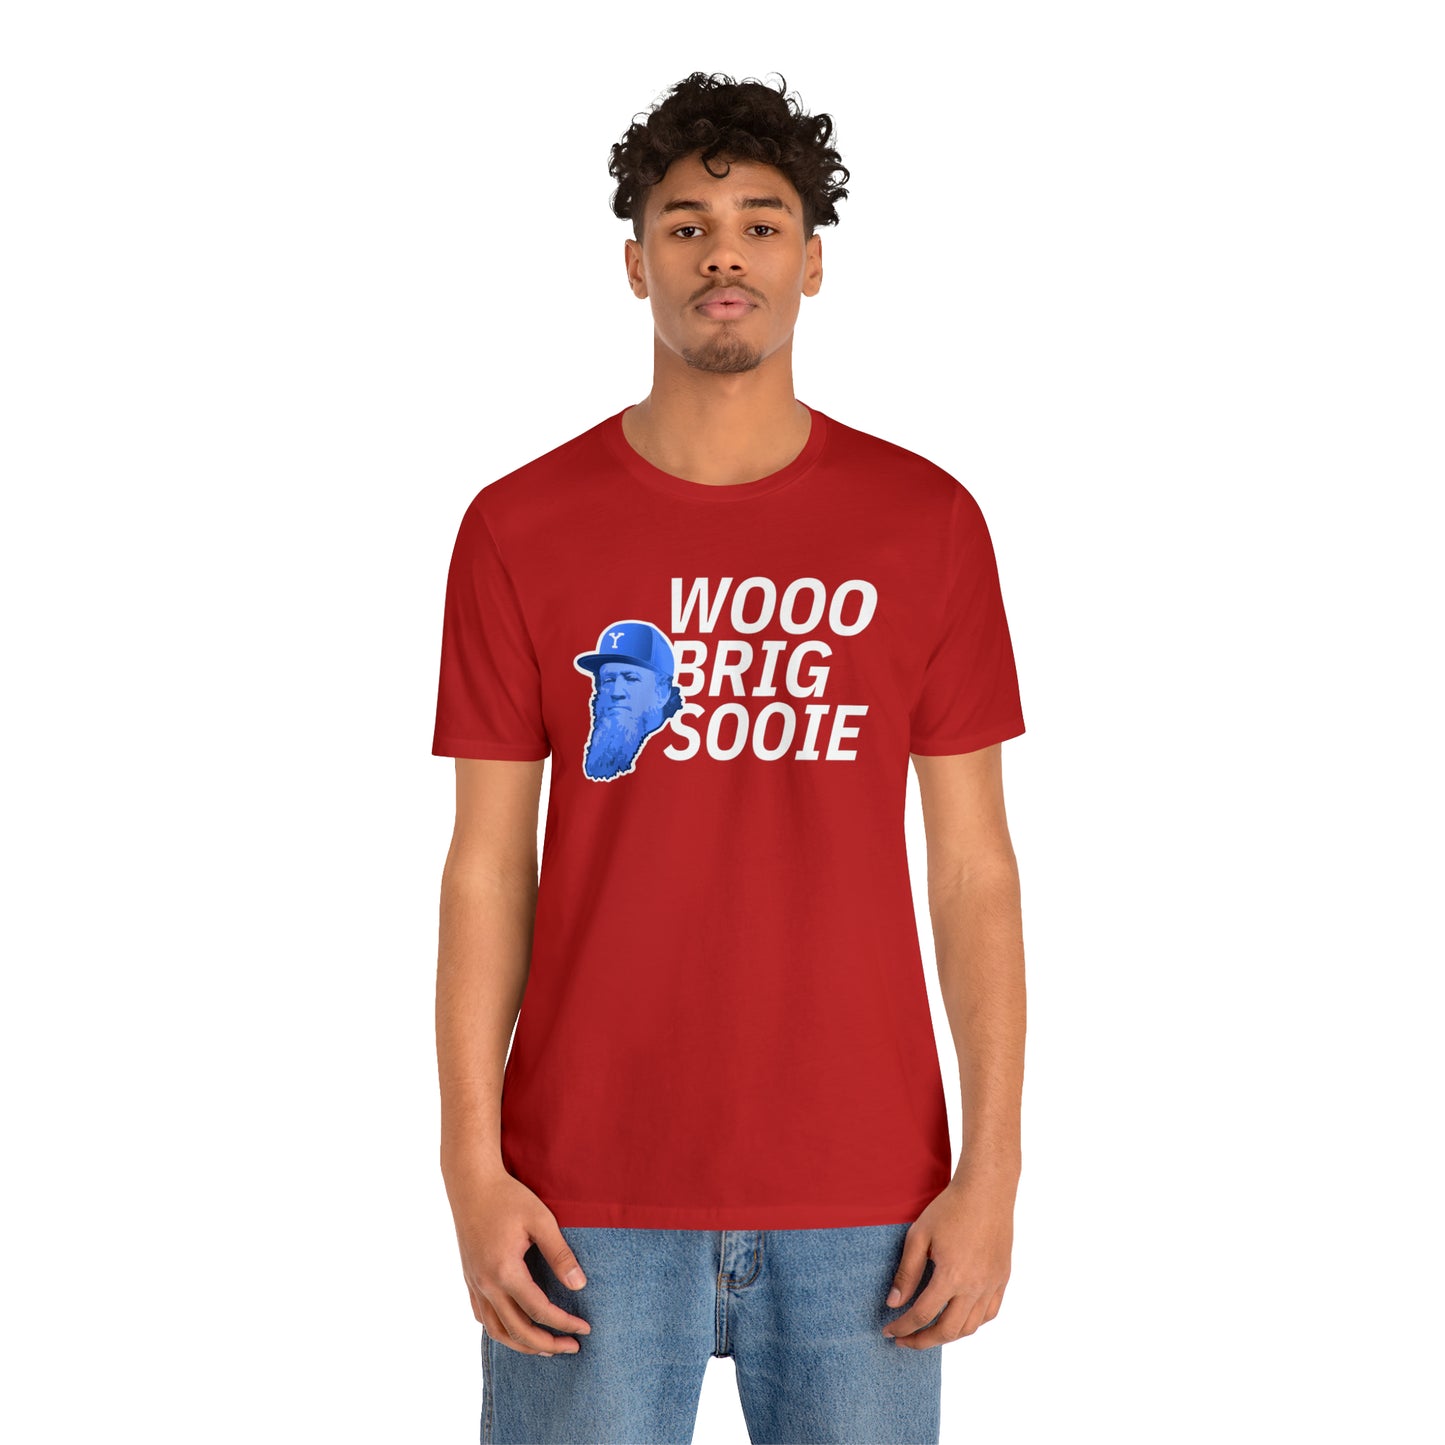 BYU Football vs Arkansas Razorbacks Football "Woo Brig Sooie" Shirt